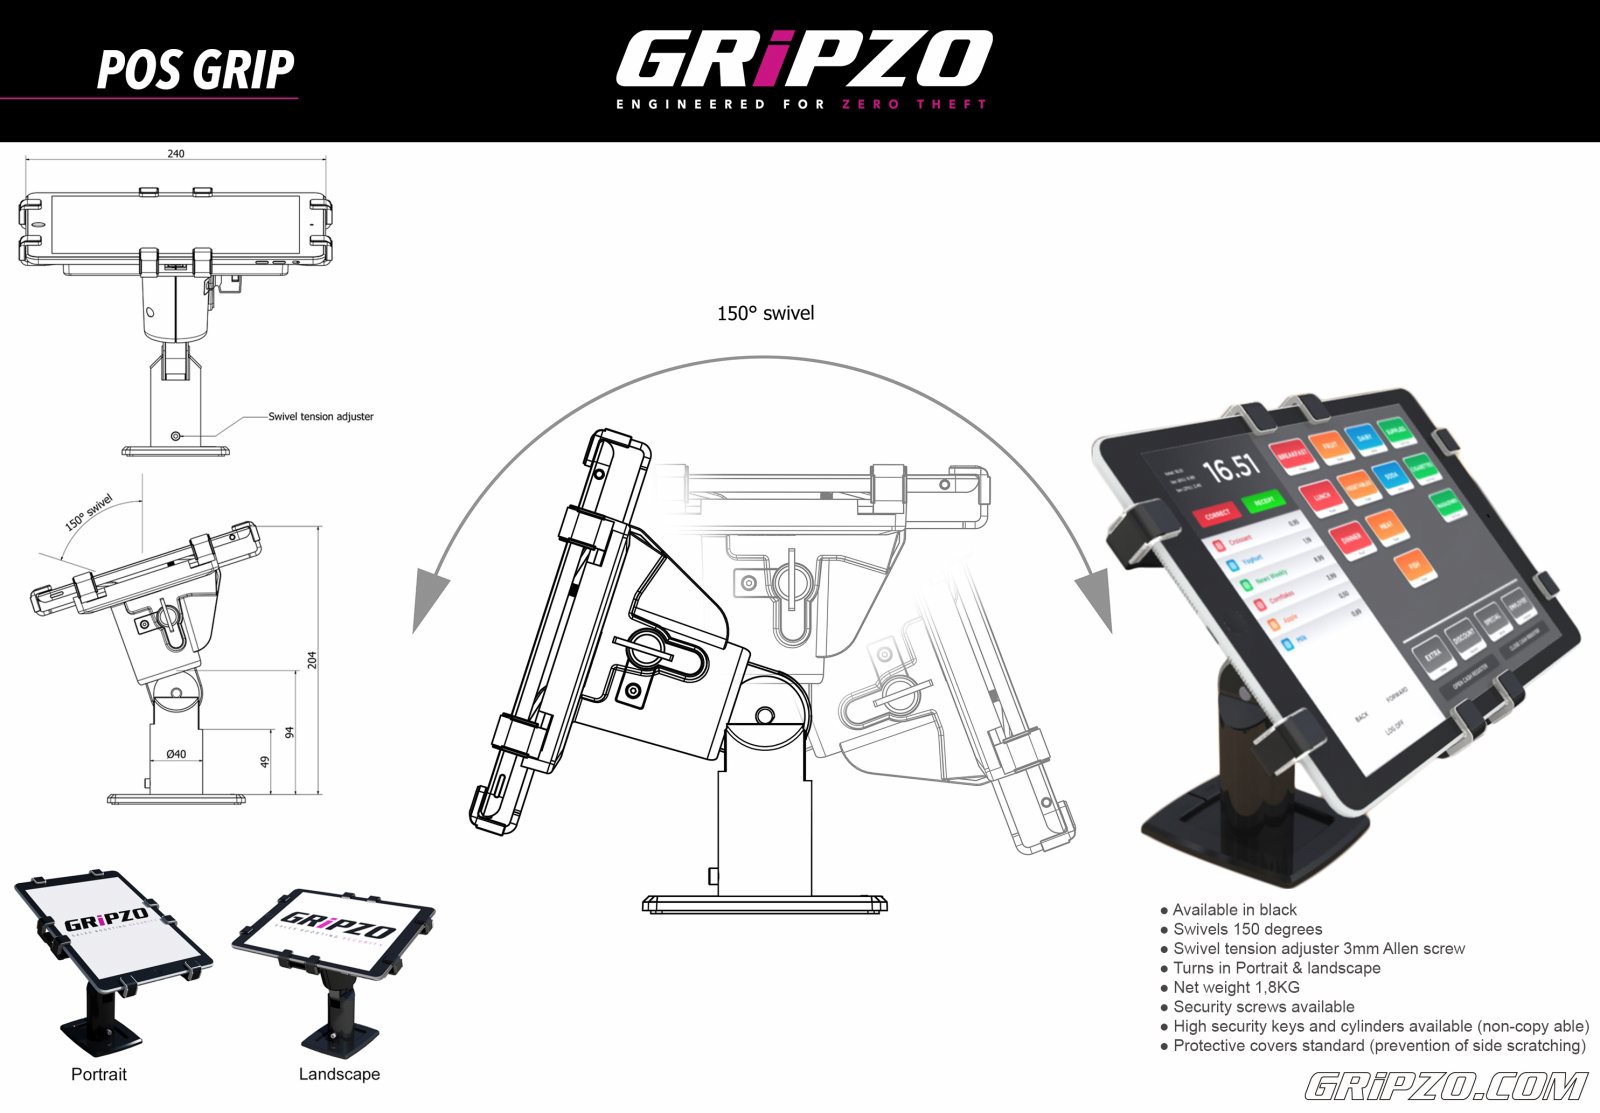 gripzo-pos-grip-product-sheet-19-1-2015.jpg